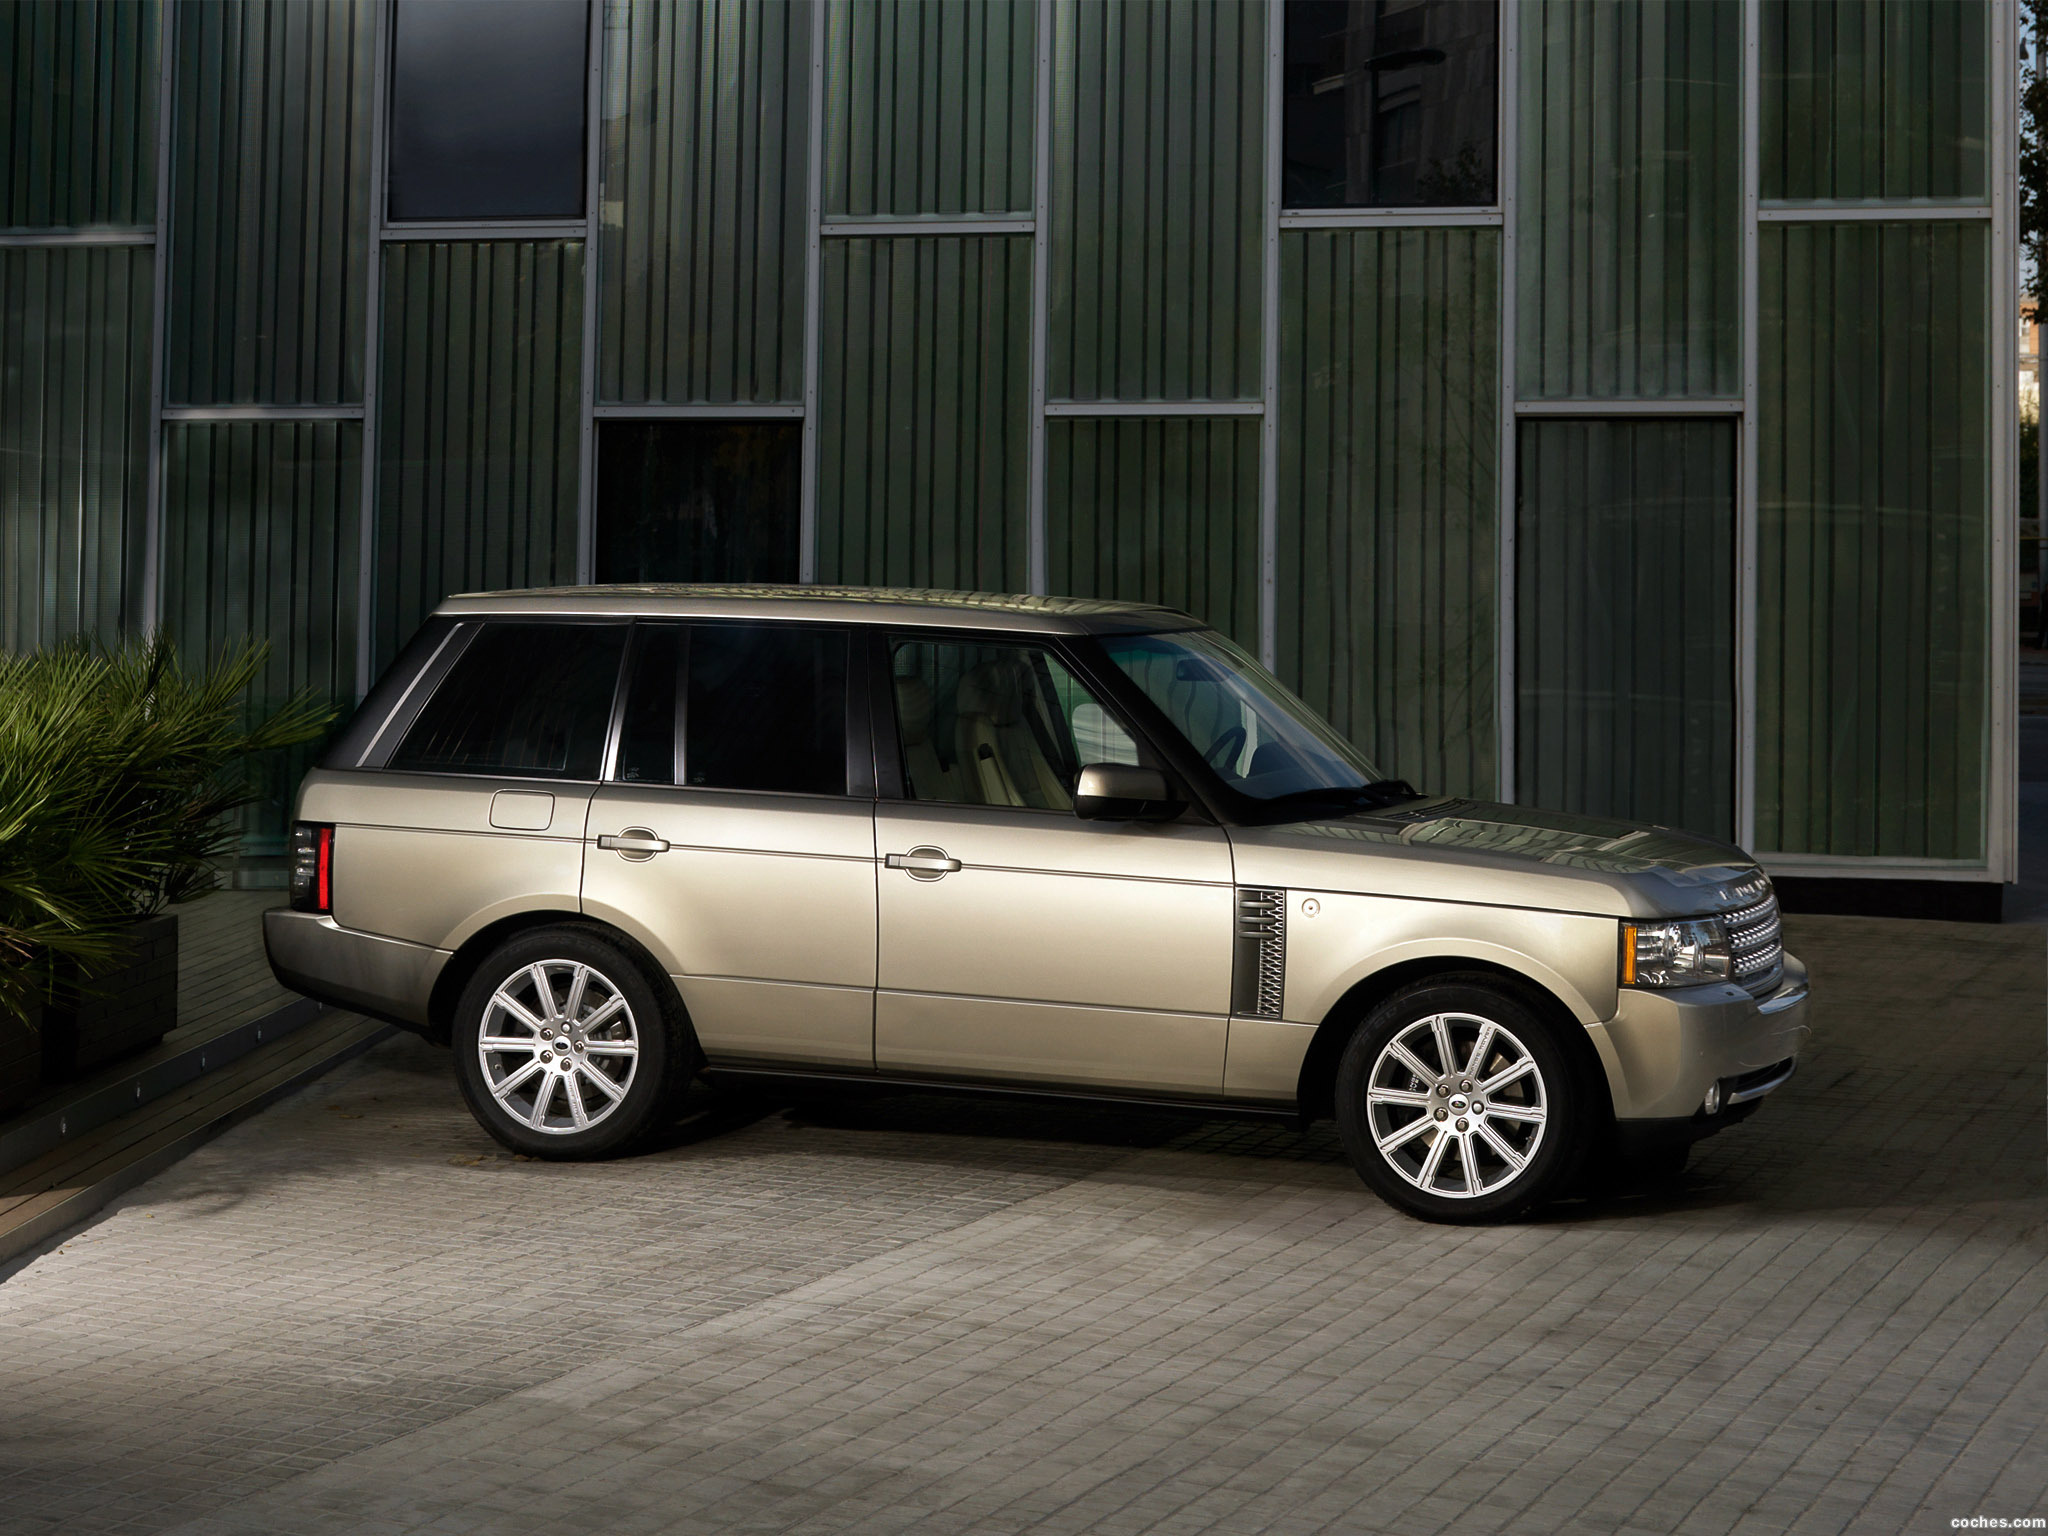 Рендж ровер вог l322. Рендж Ровер 2010. Range Rover 2010 Вог. Range Rover Vogue 2010. Range Rover 2010.